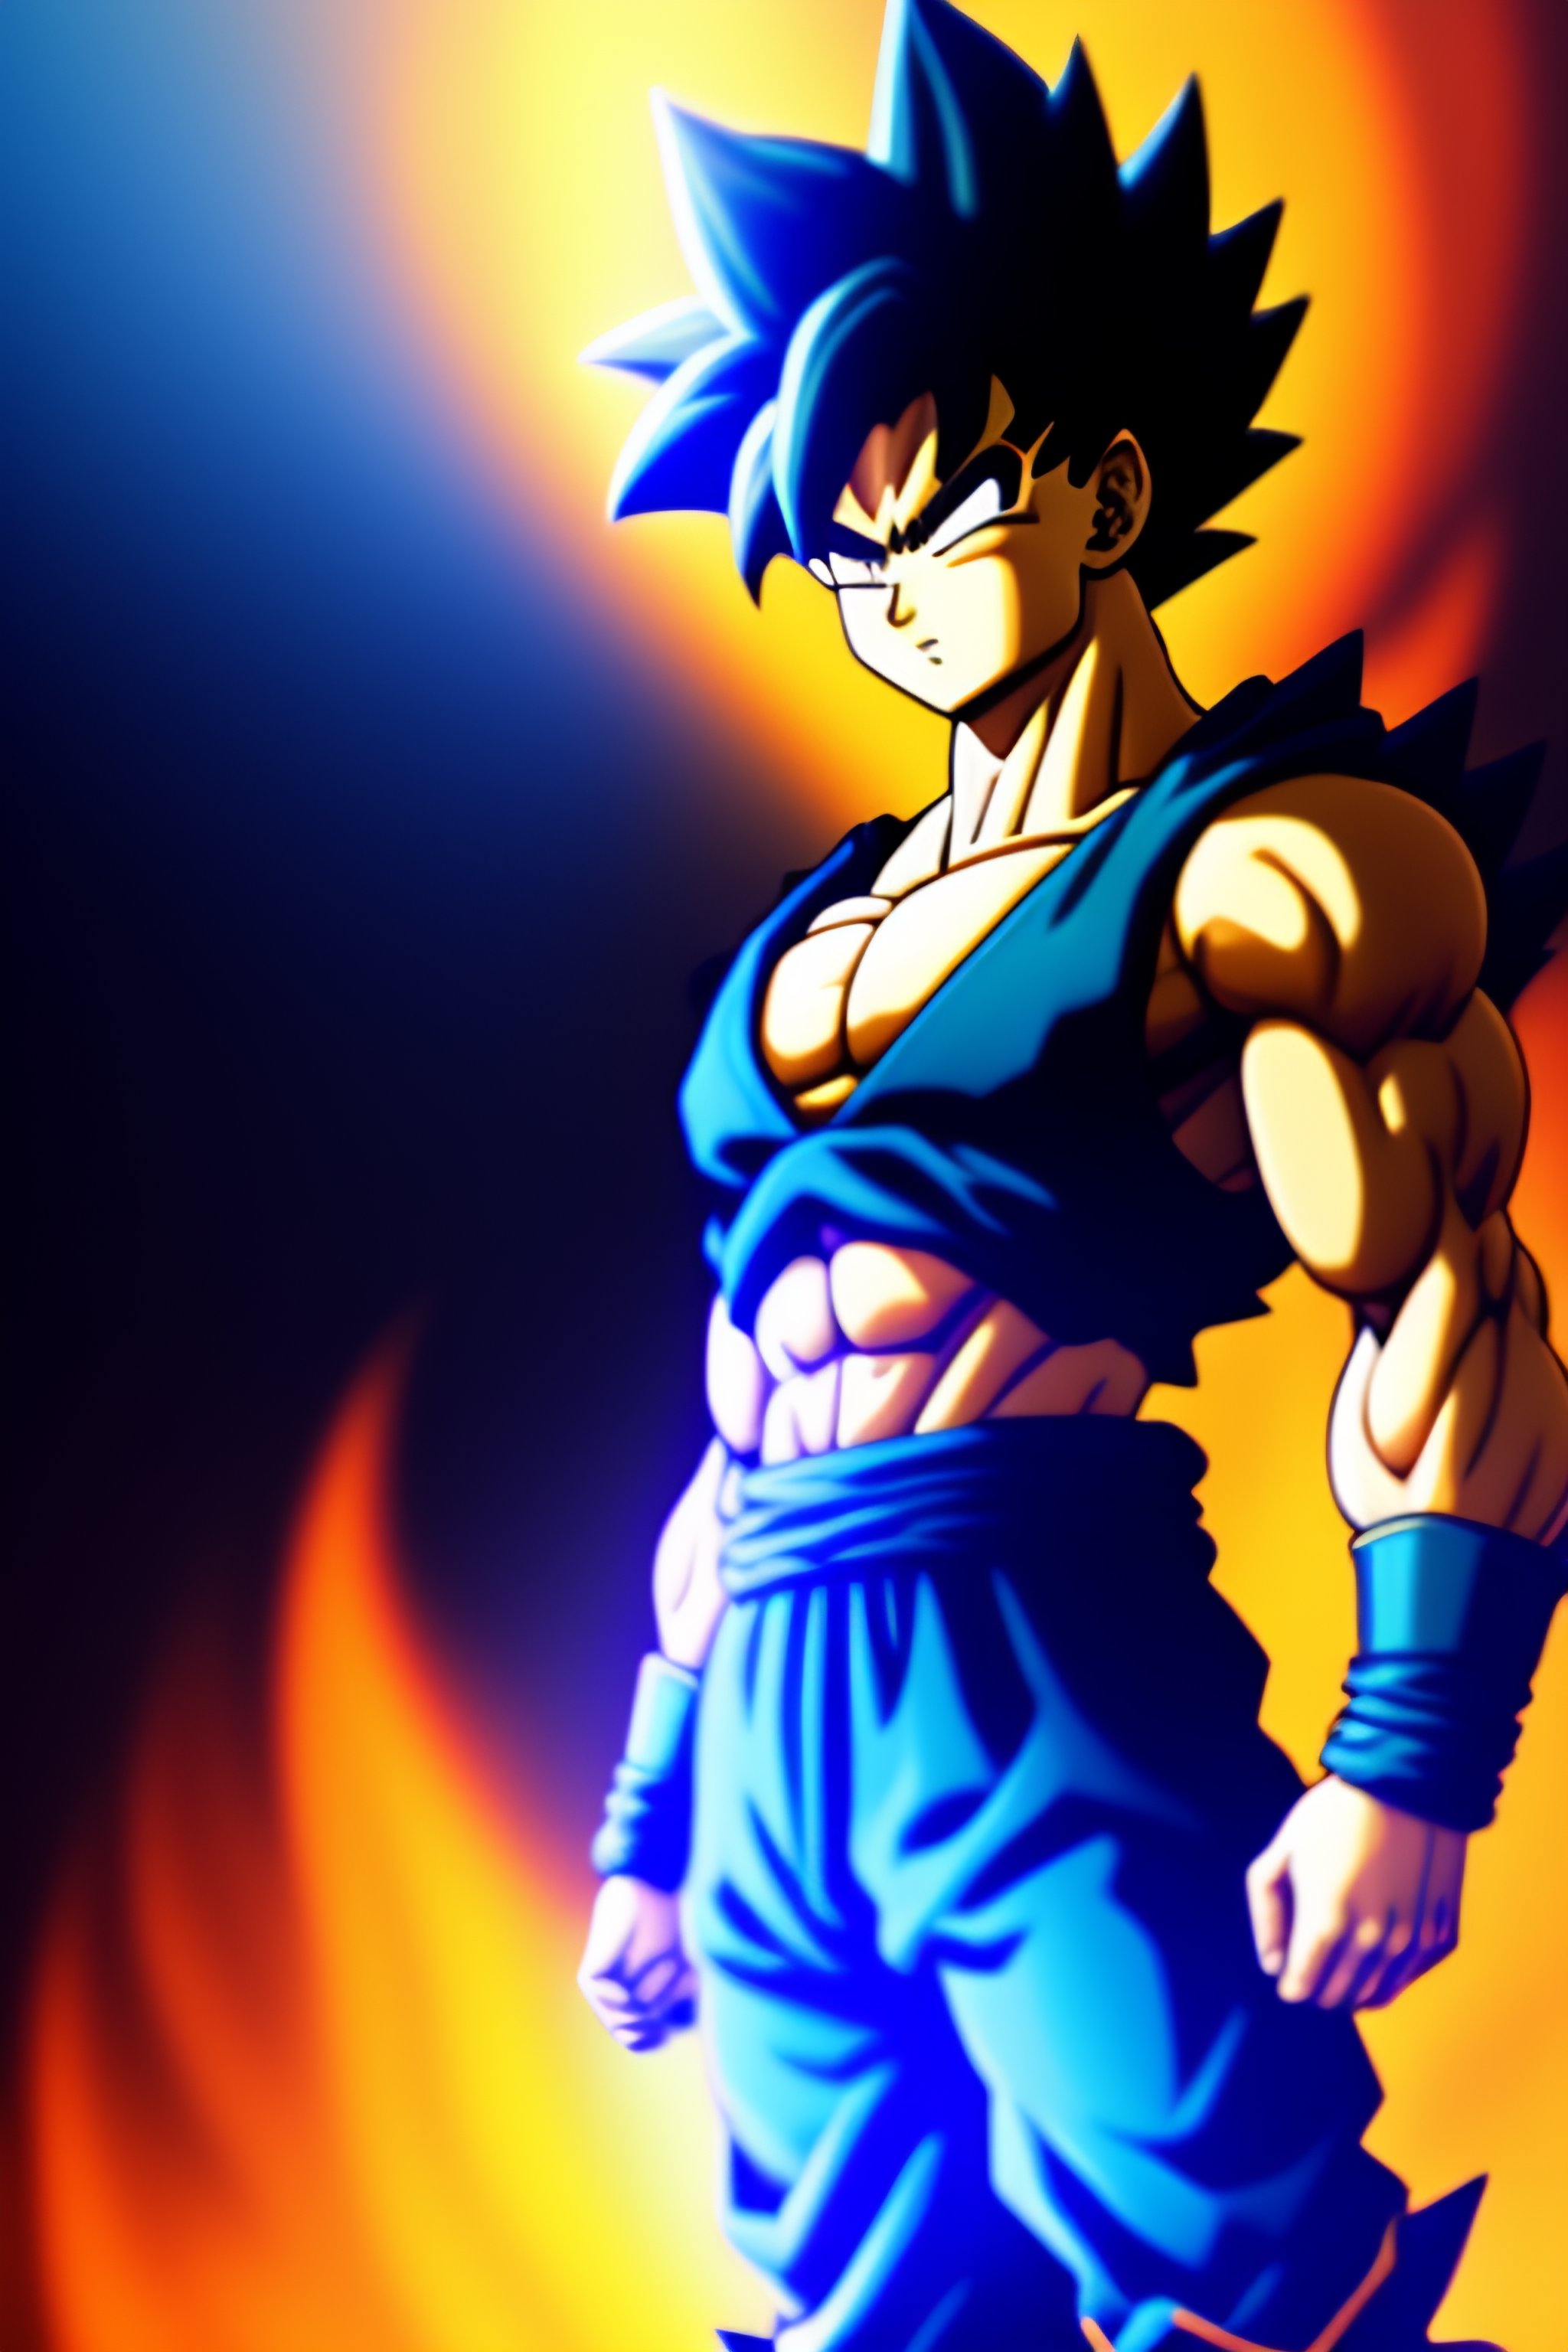 Super Saiyan God Goku  Goku super, Dragon ball super wallpapers, Goku super  saiyan god